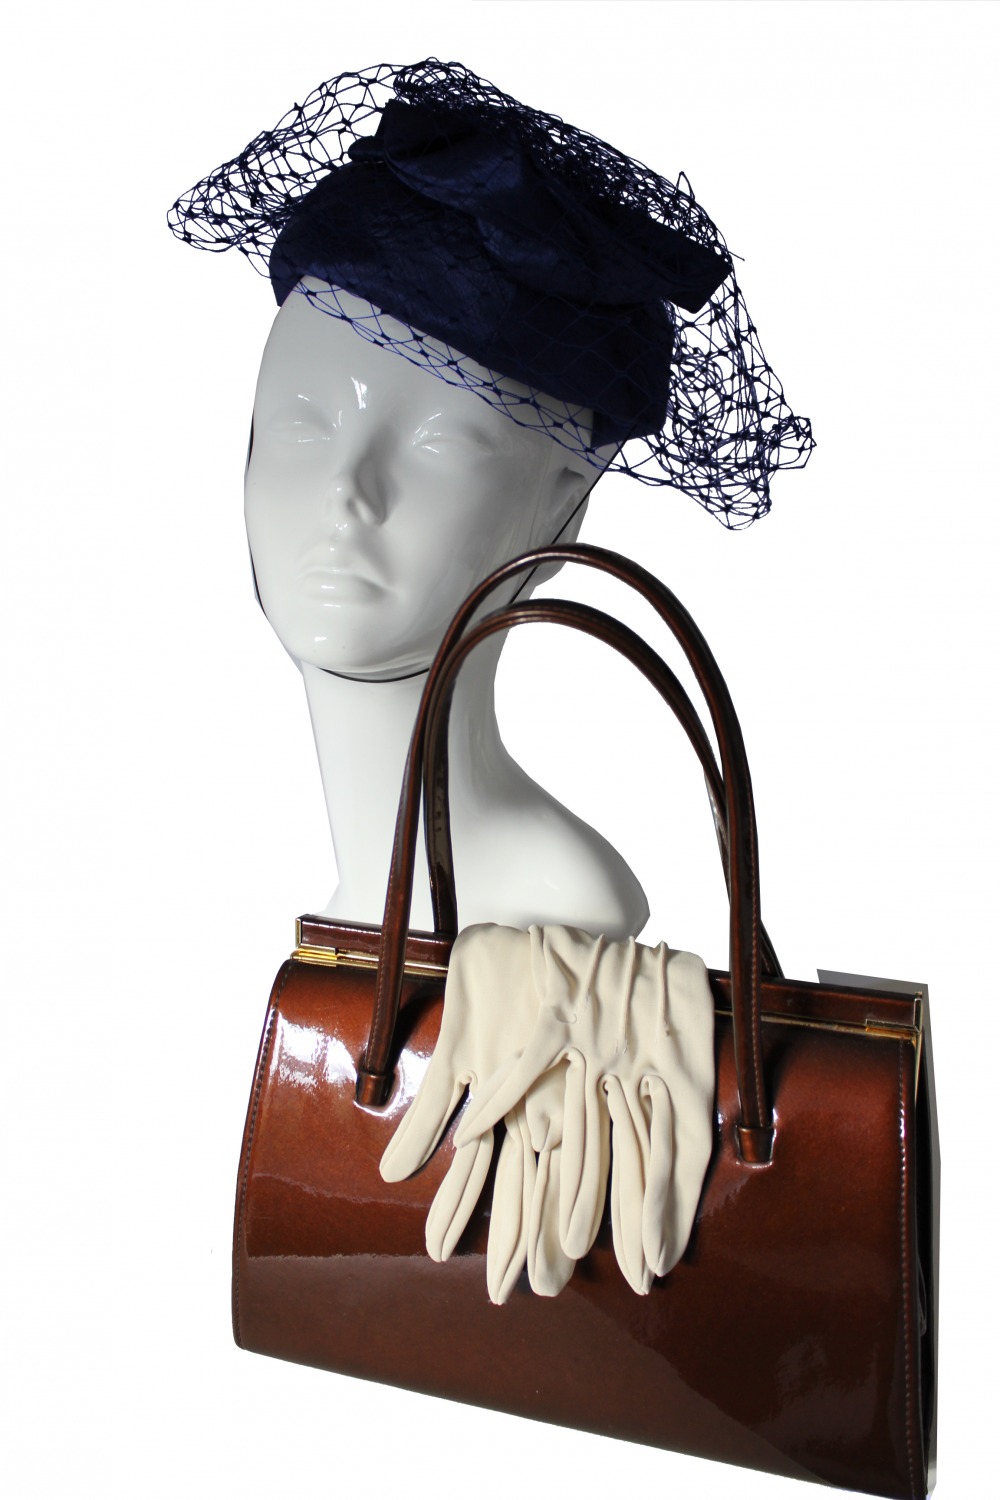 Ladies 1940s Style Tea Dress Wartime Goodwood Costume Size 14 - 16  Image